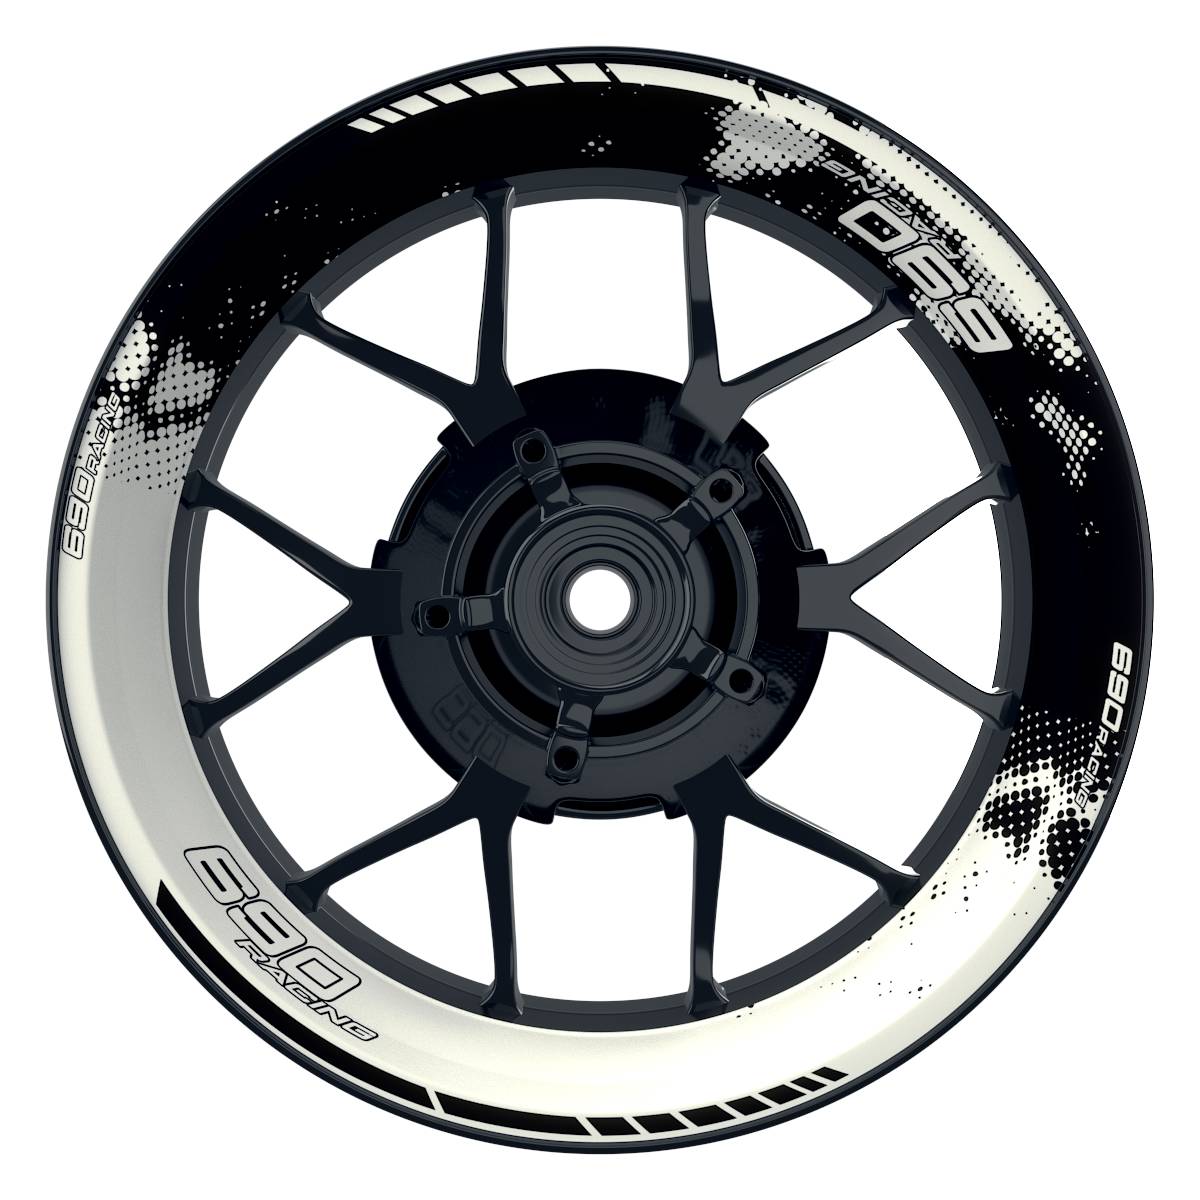 KTM 690RACING Dots schwarz weiss Wheelsticker Felgenaufkleber